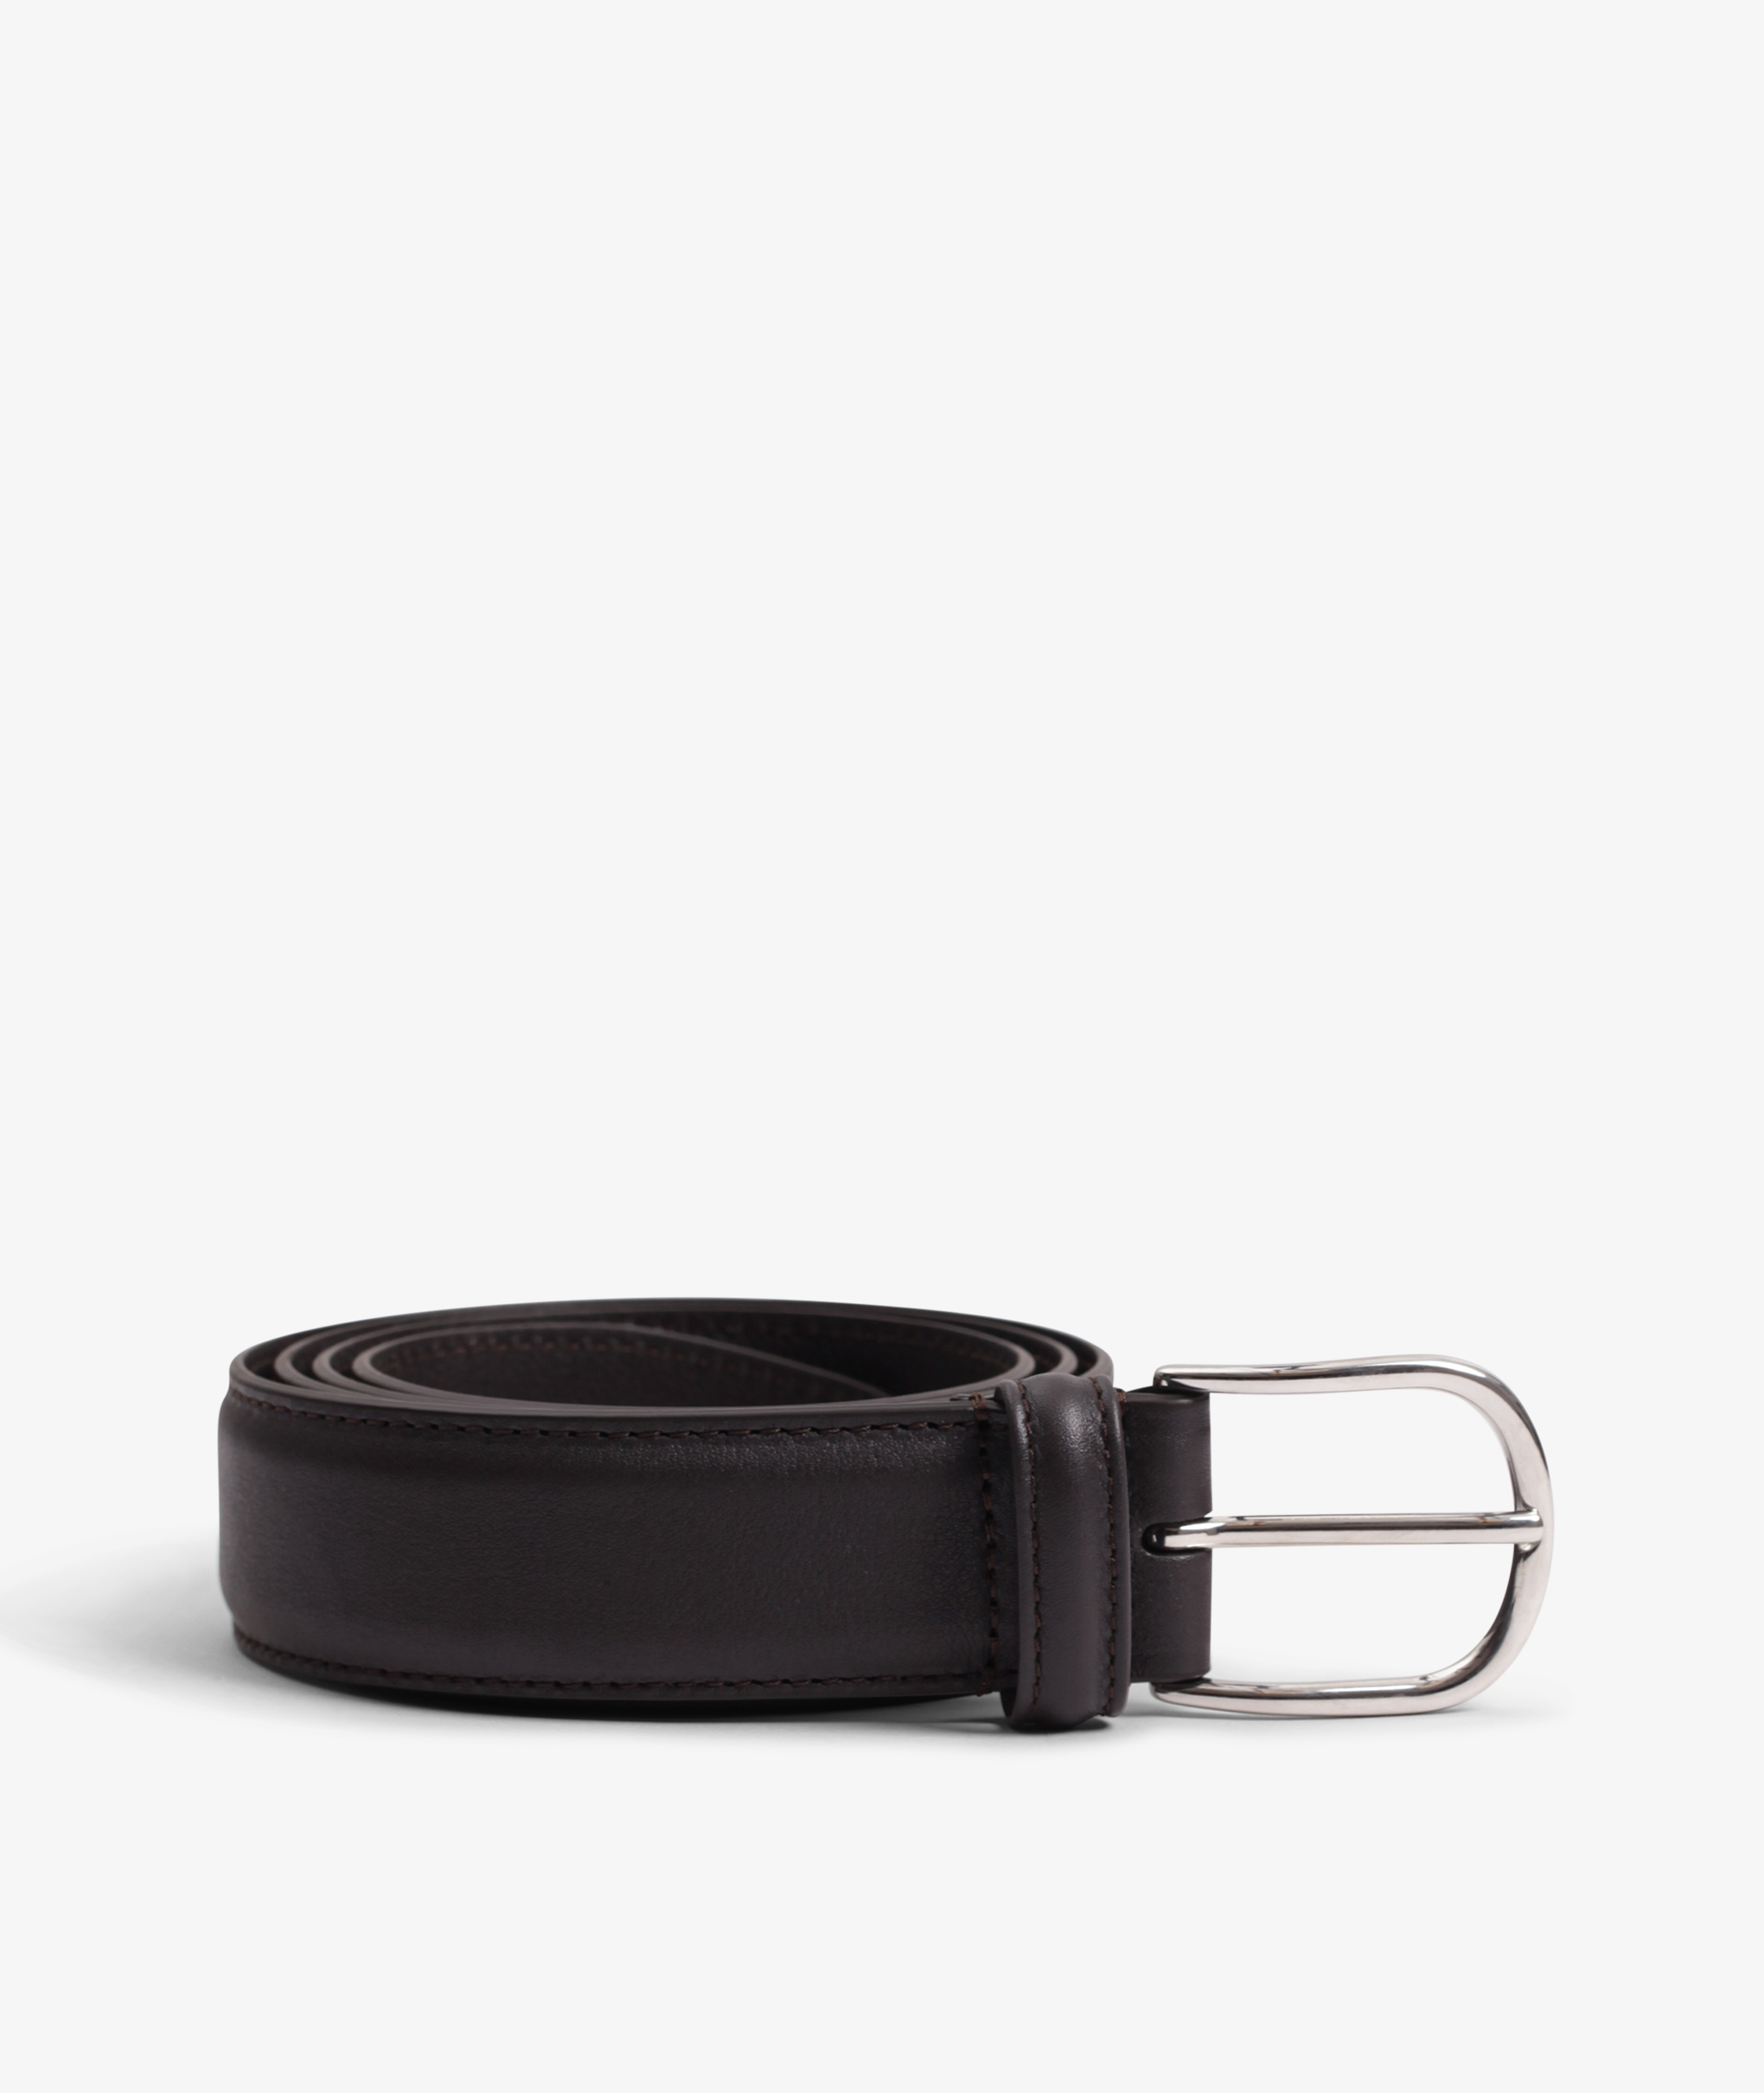 https://www.norsestore.com/shared/165/694/andersons-classic-leather-belt_u.jpg